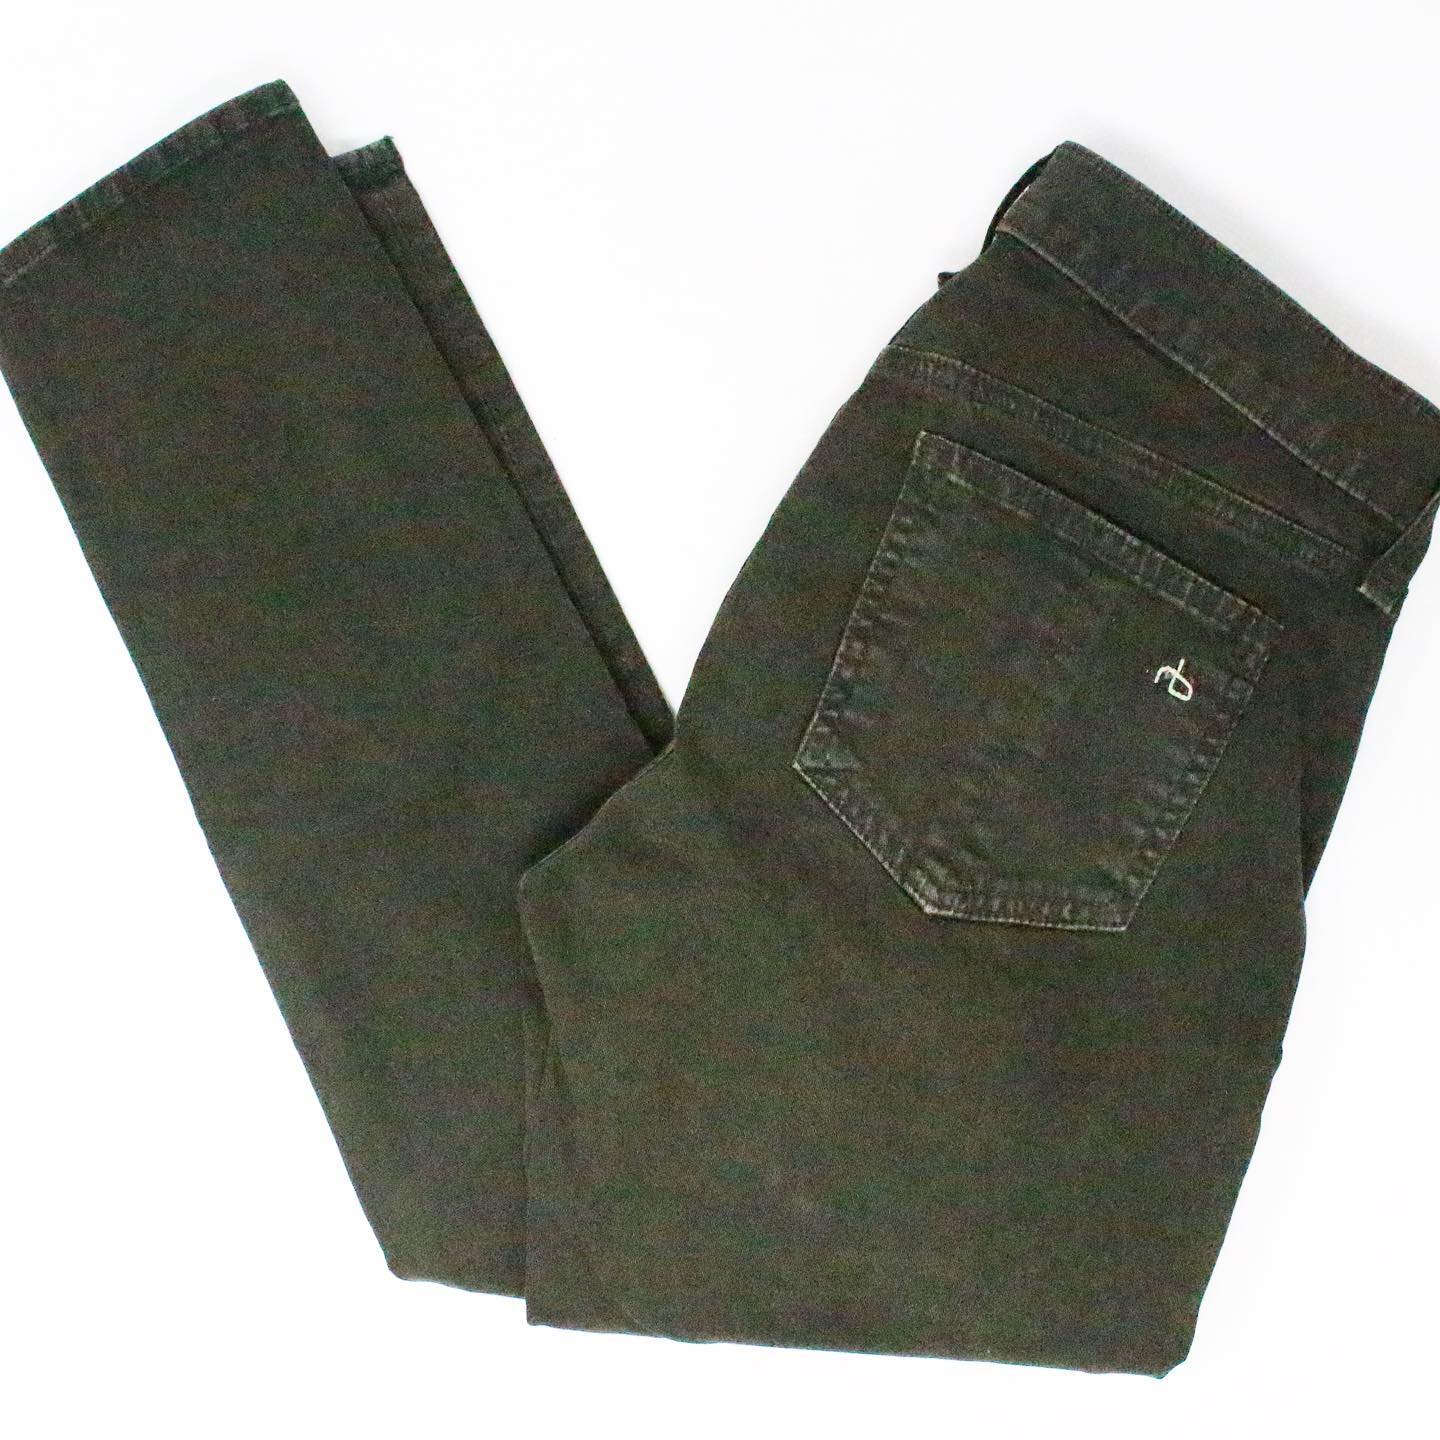 Downtown jubilæum burst RAG & BONE #31085 Olive Green Skinny Jeans (Size 26) – ALL YOUR BLISS